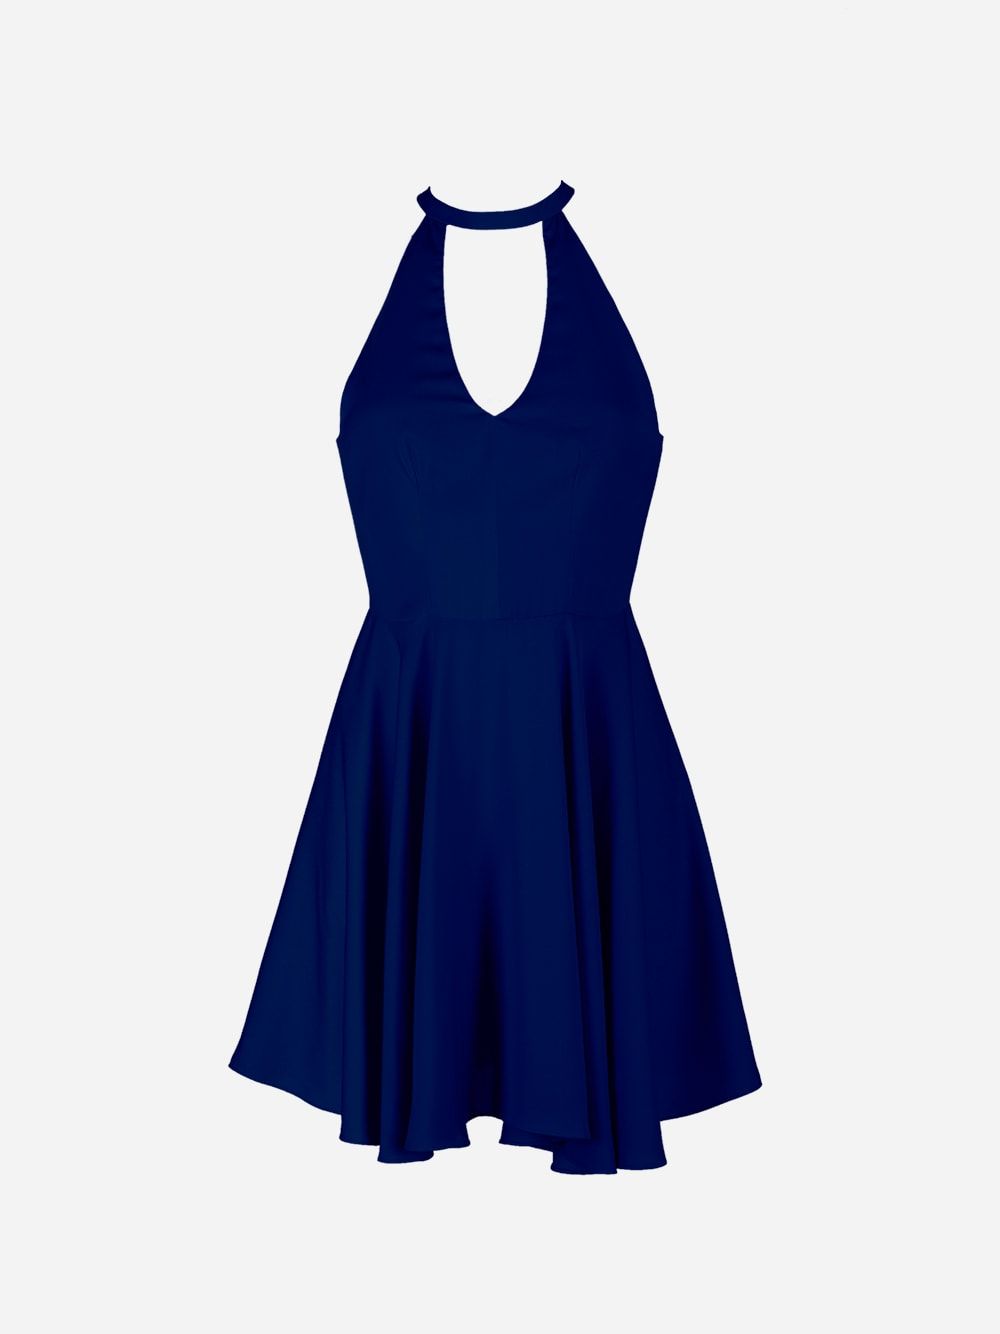 Midnightblue Halter Neck Mini Dress 